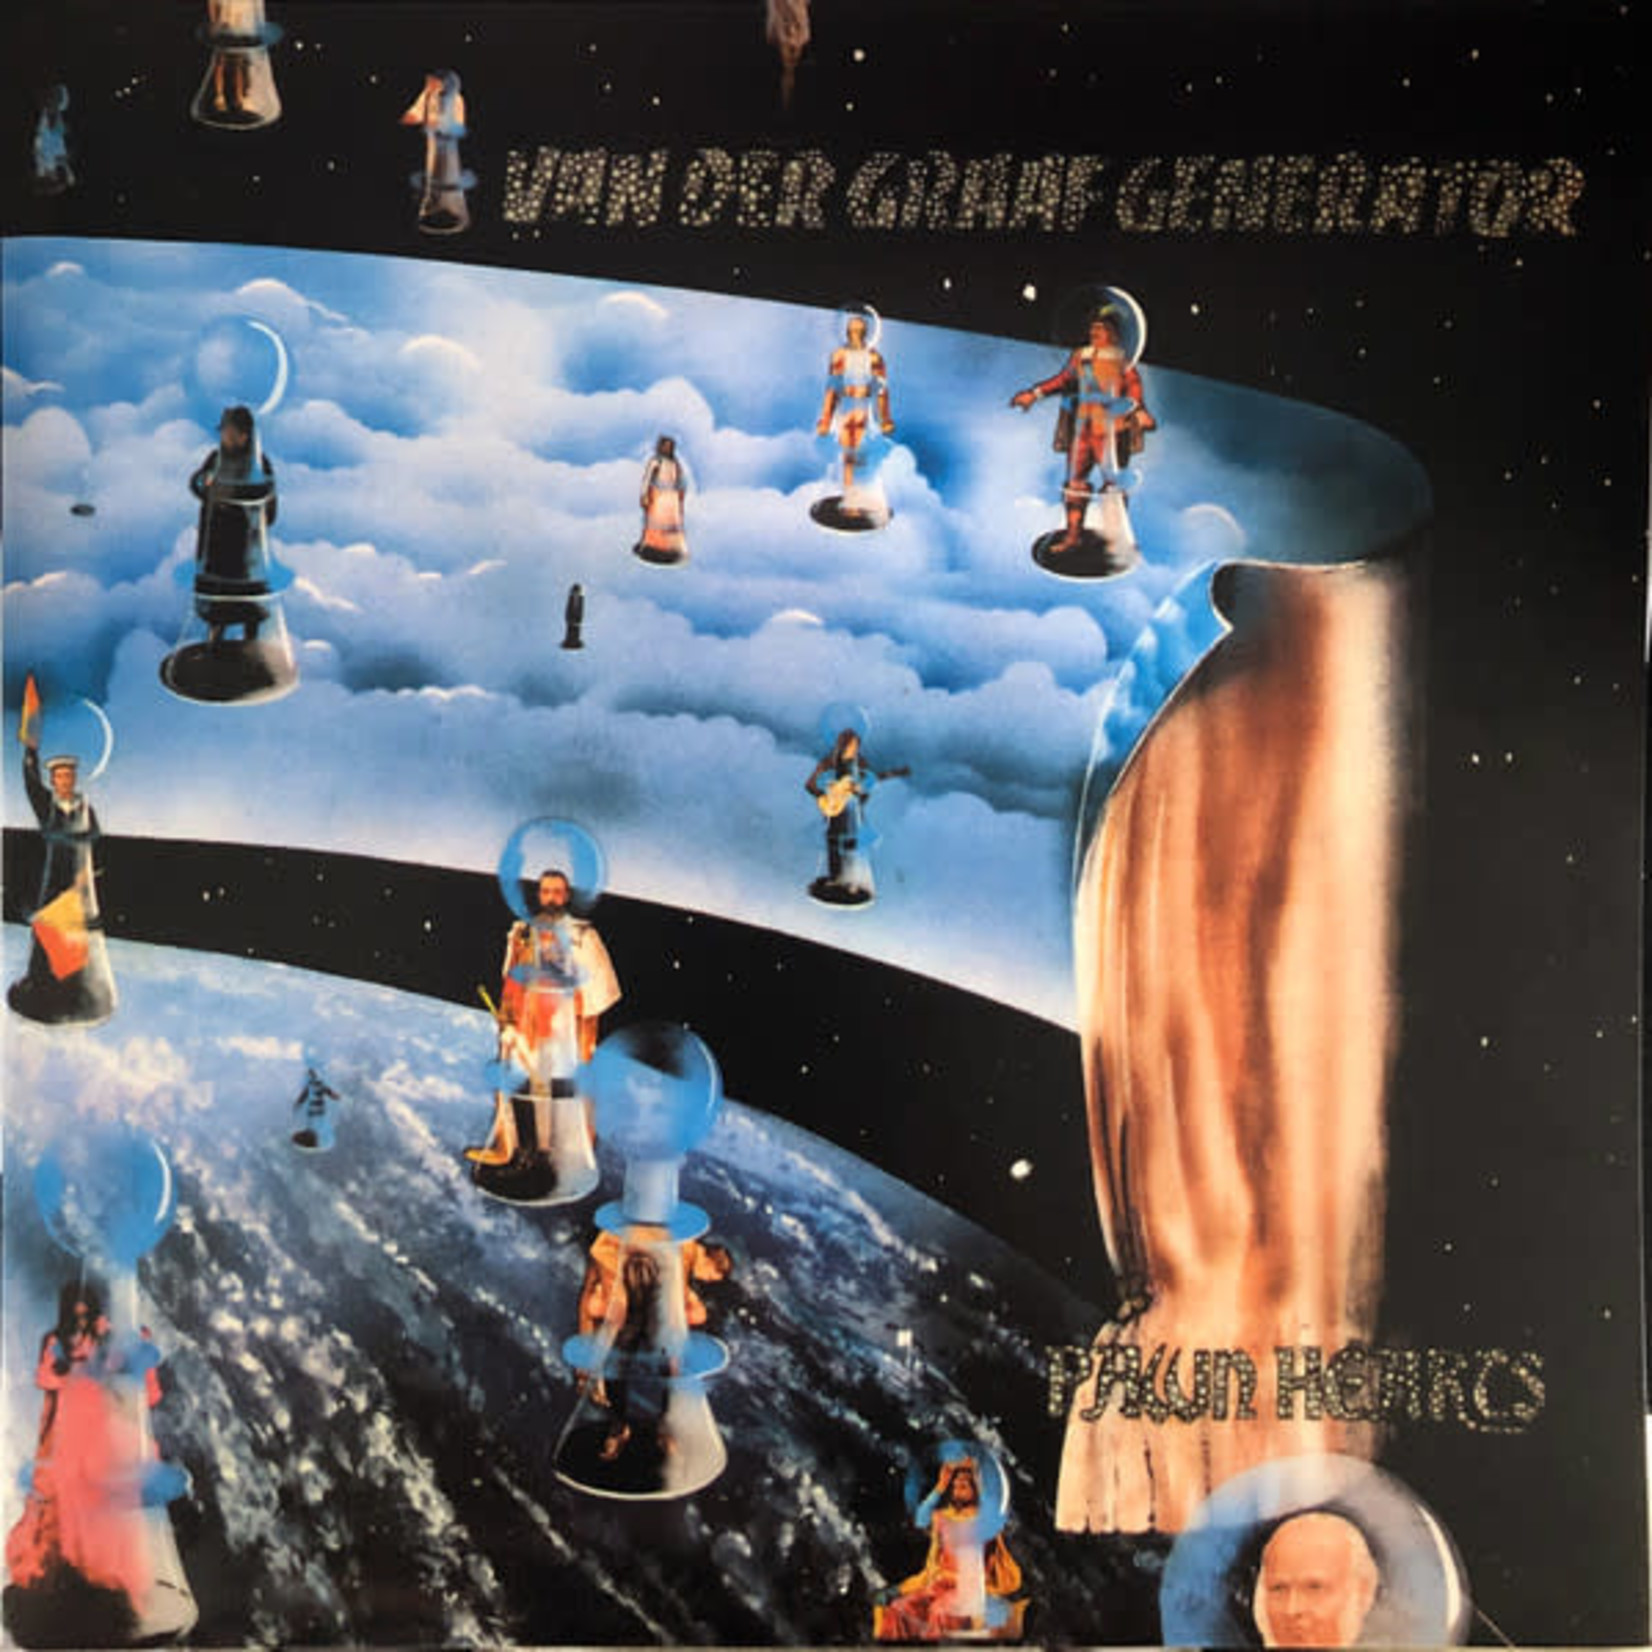 [New] Van Der Graaf Generator - Pawn Hearts (remastered)